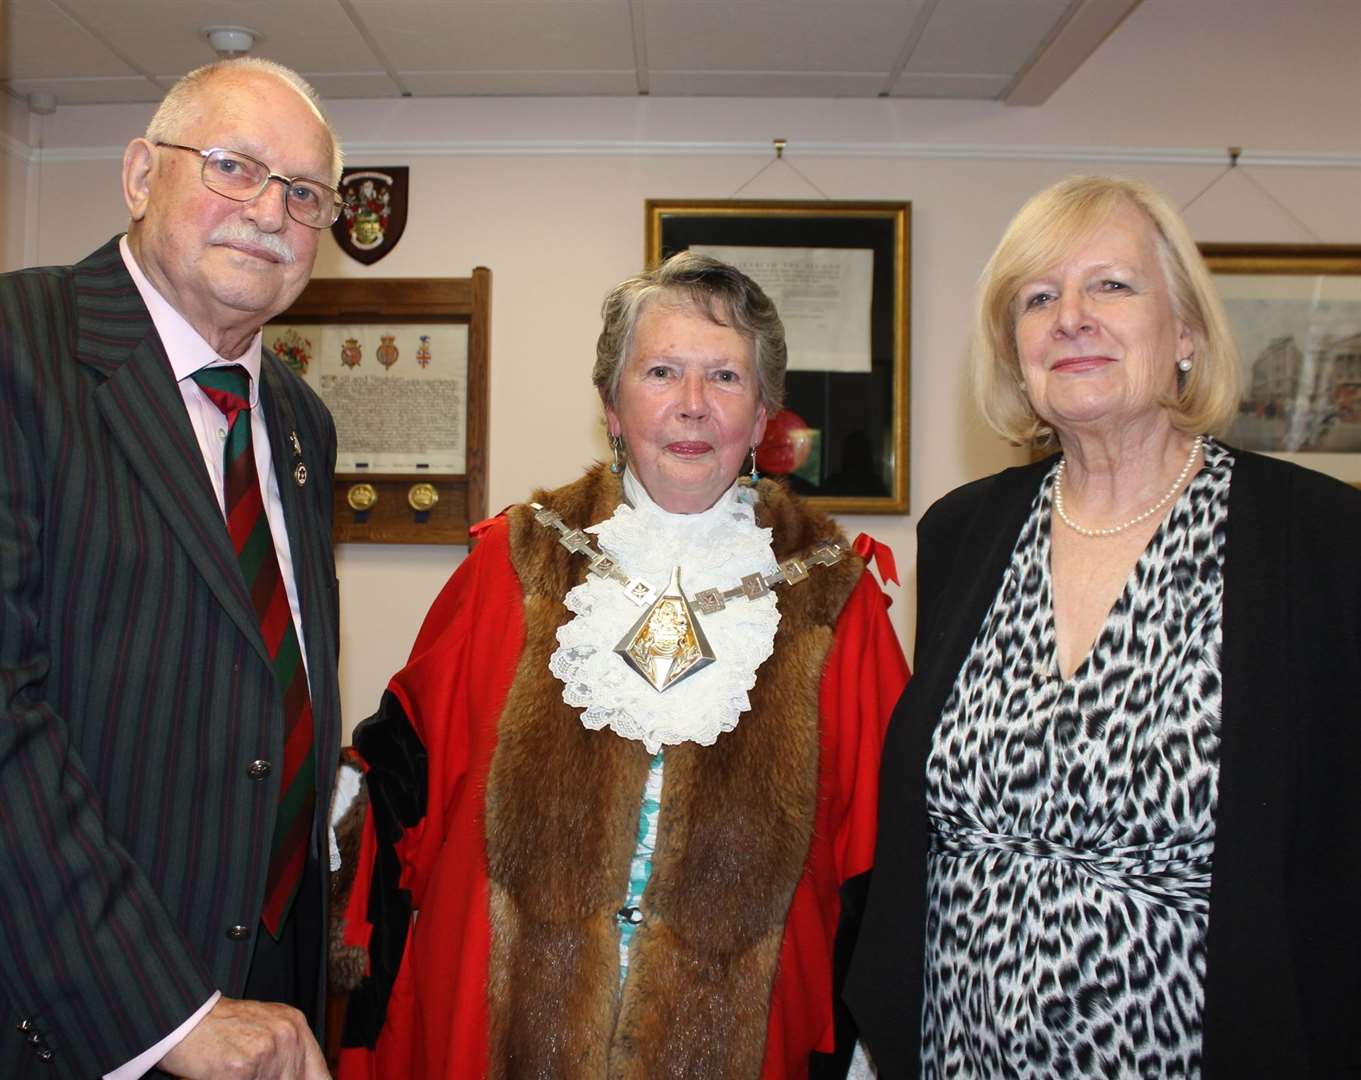 Mayor Consort David Webb, Mayor Jenny Webb and Cllr Jessamy Blanford